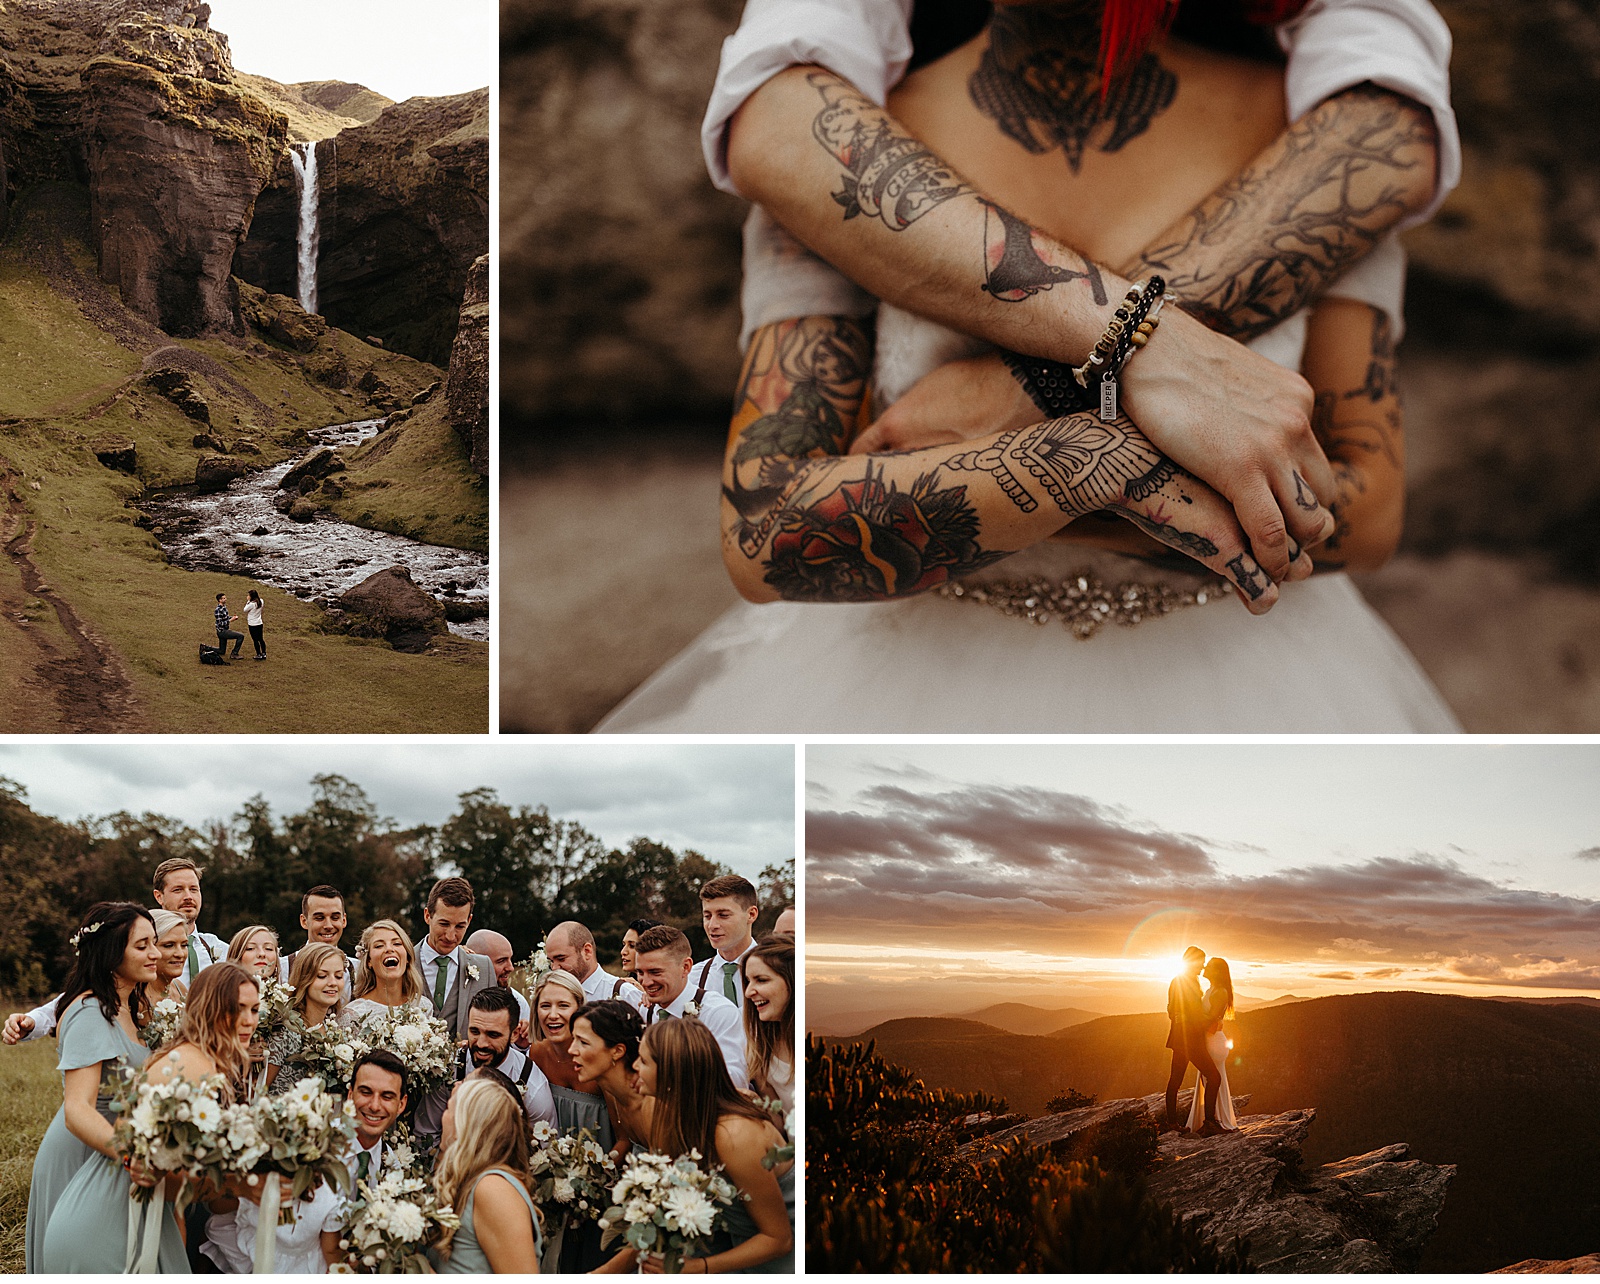 Earthy Unique Destination Wedding Photos // Adventure-Inspired Elopement & Wedding Photographer Victoria Selman